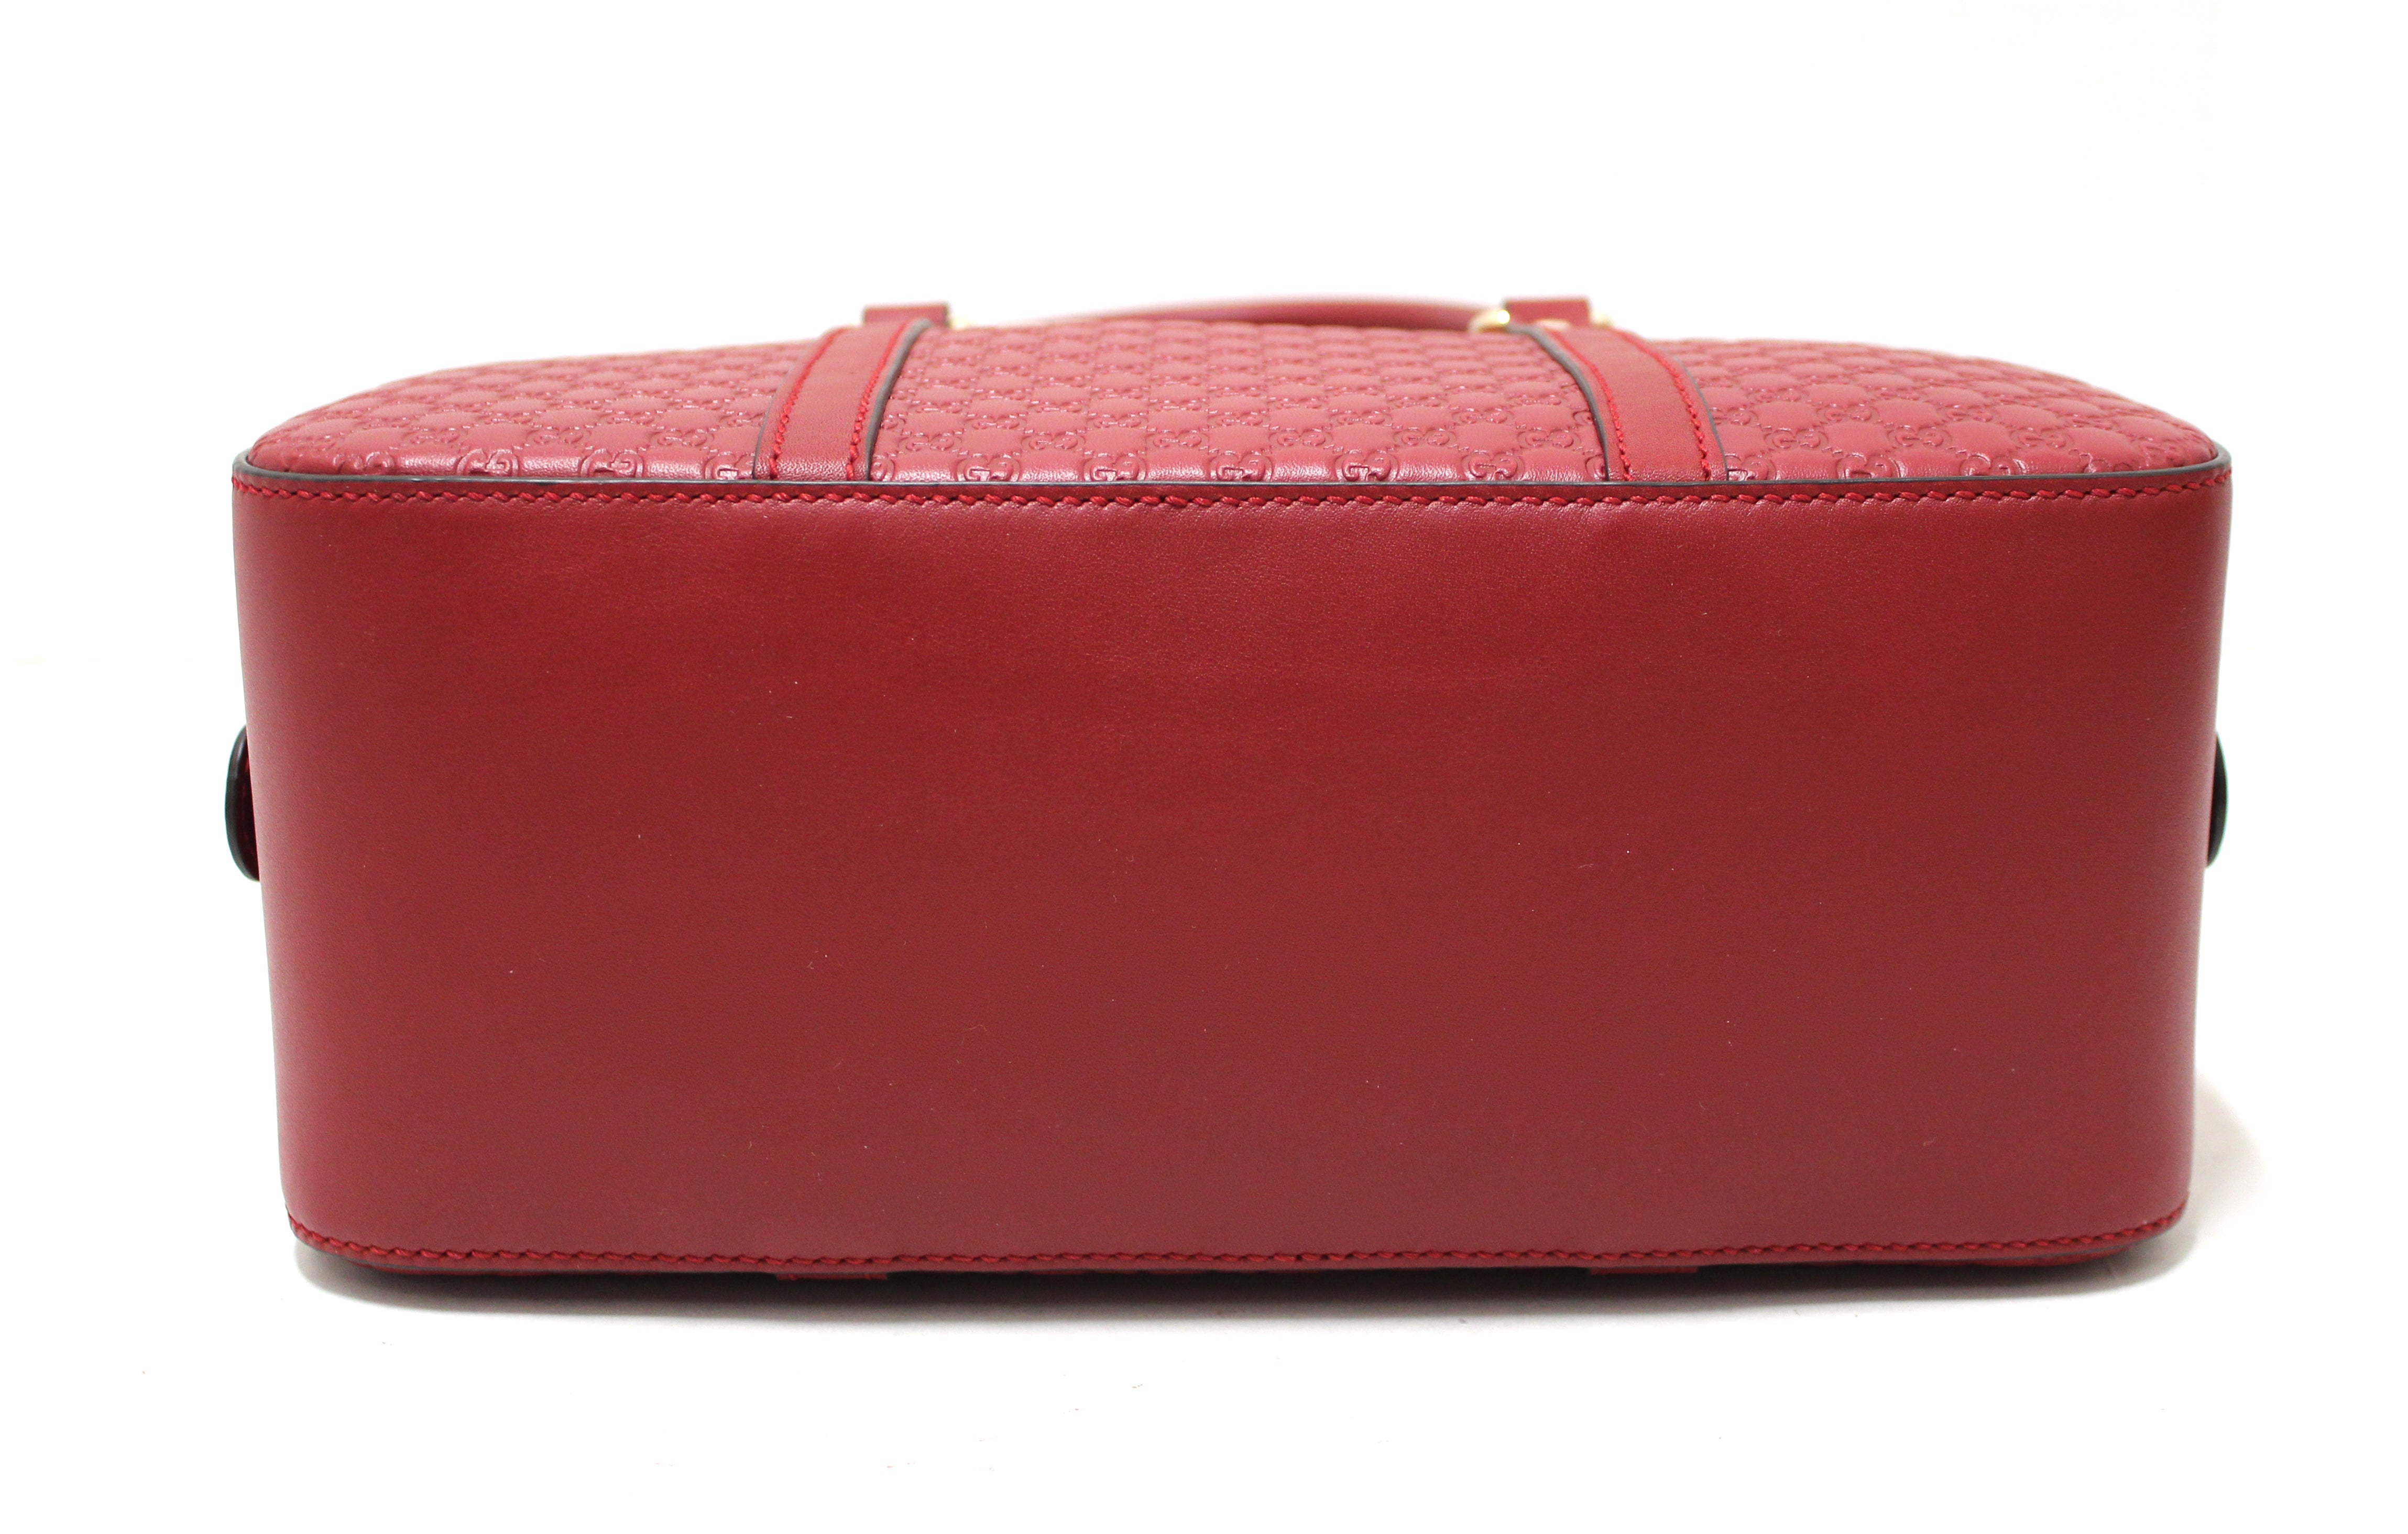 Authentic Gucci Red Pebbled Calfskin Leather Medium Soho Boston